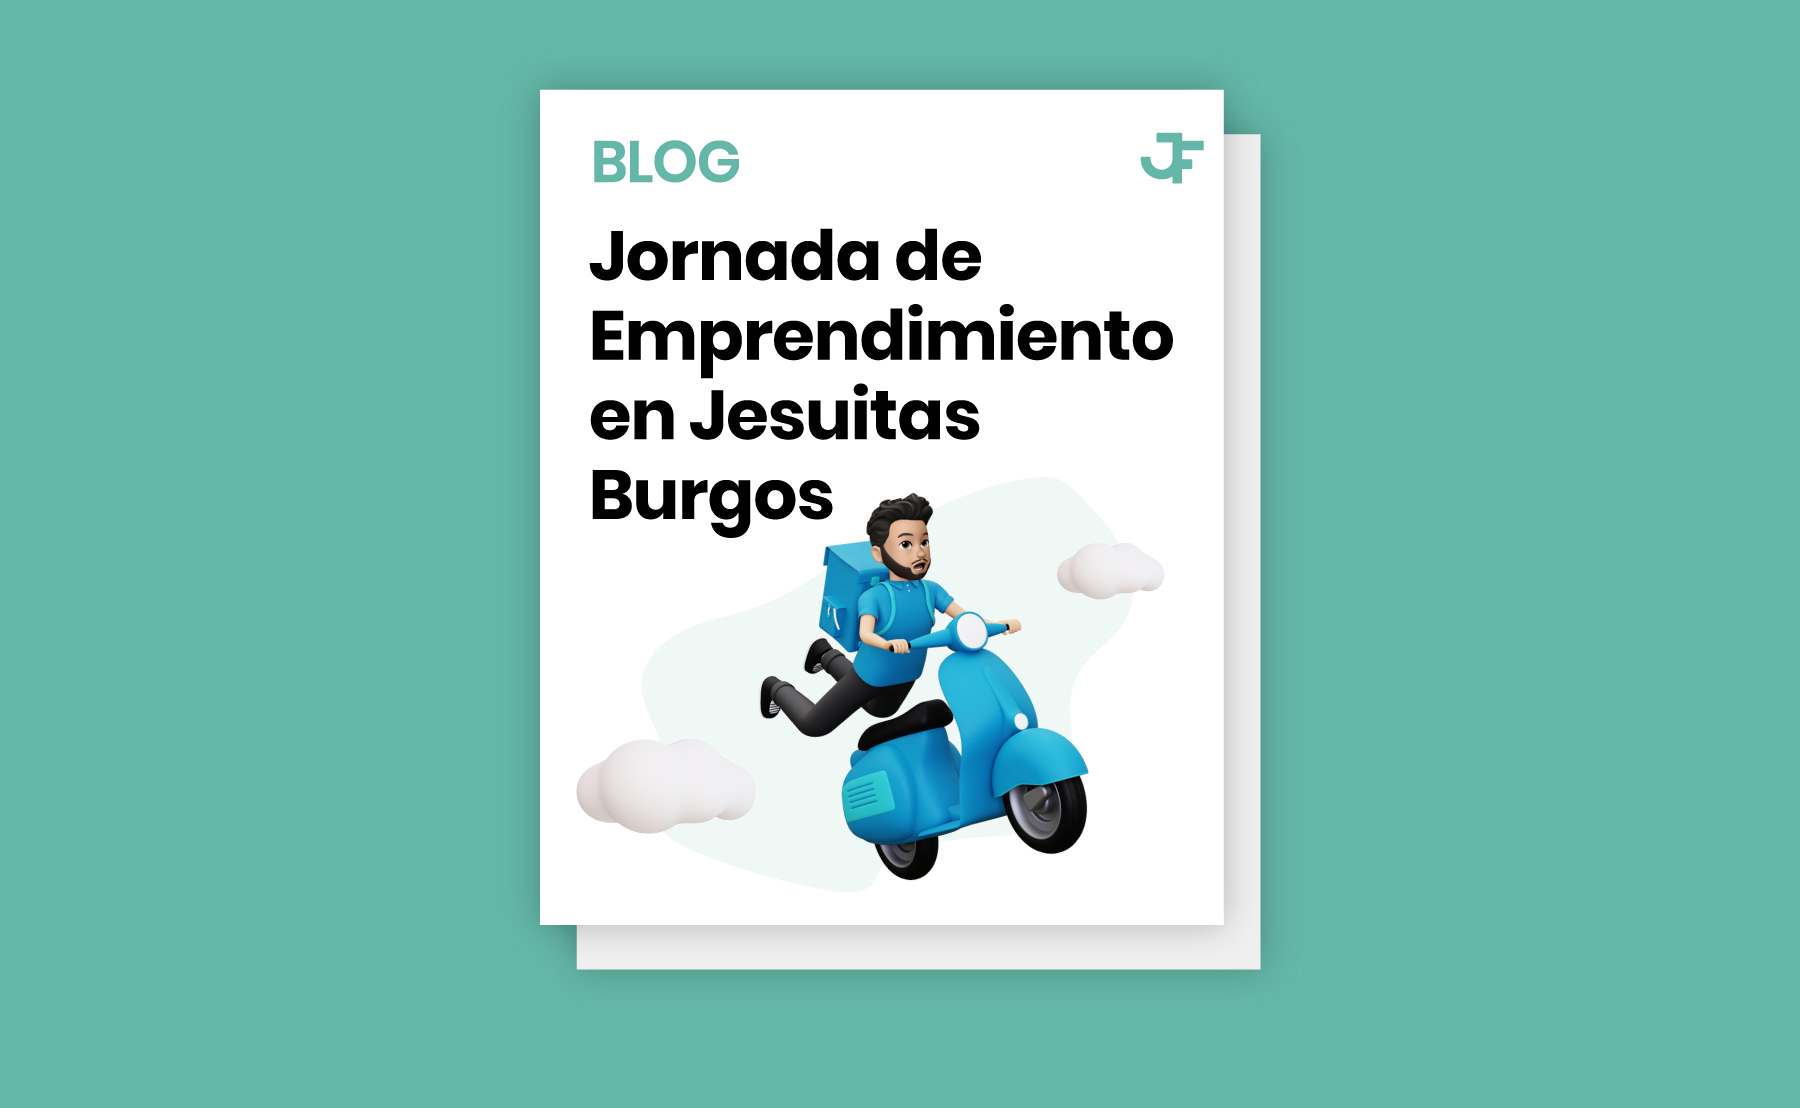 Jesuitas Burgos Emprendimiento